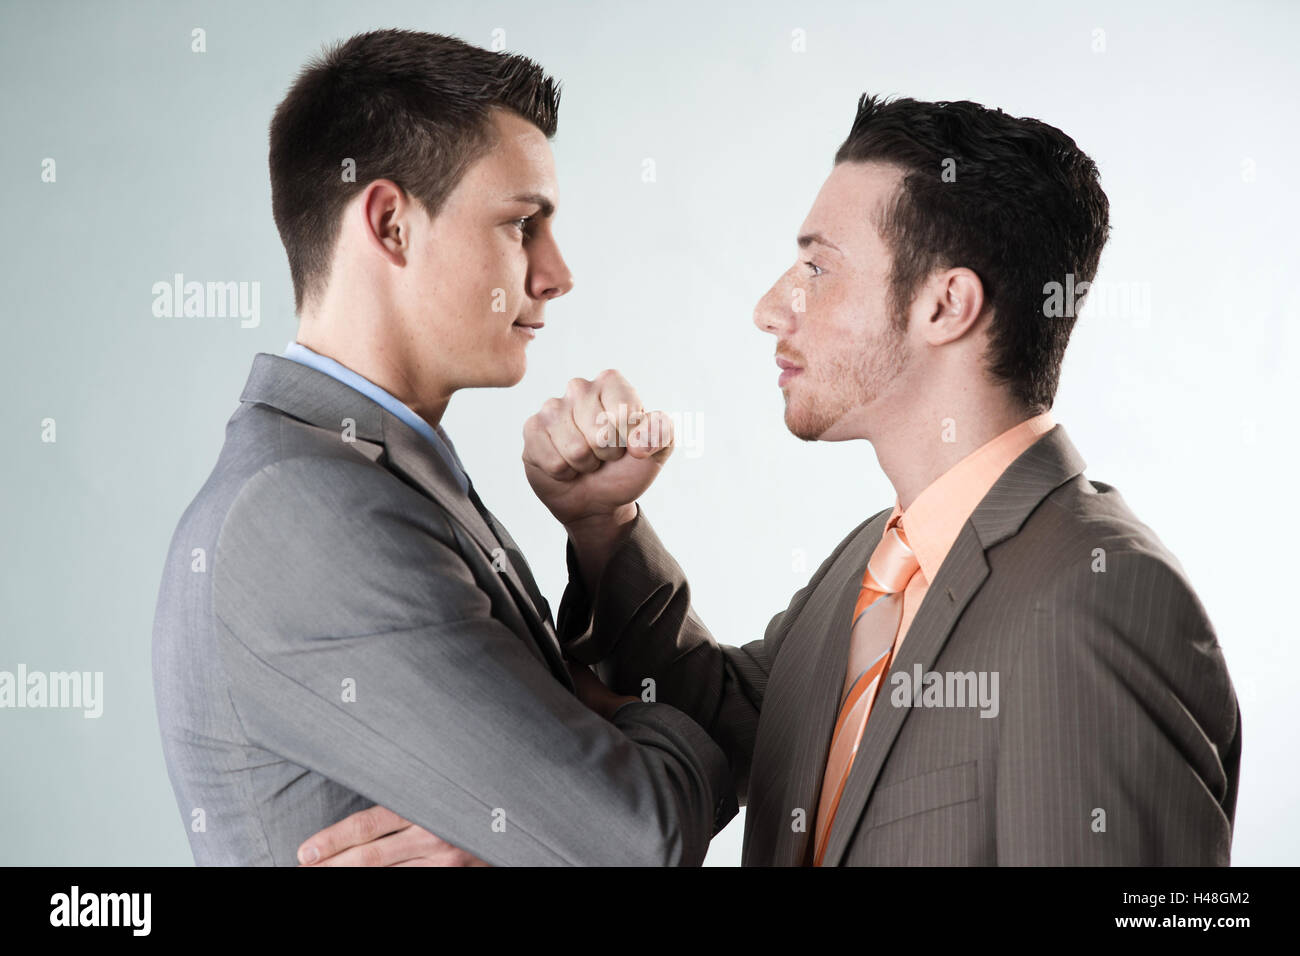 Two Jung's entrepreneurs face arguing, Stock Photo